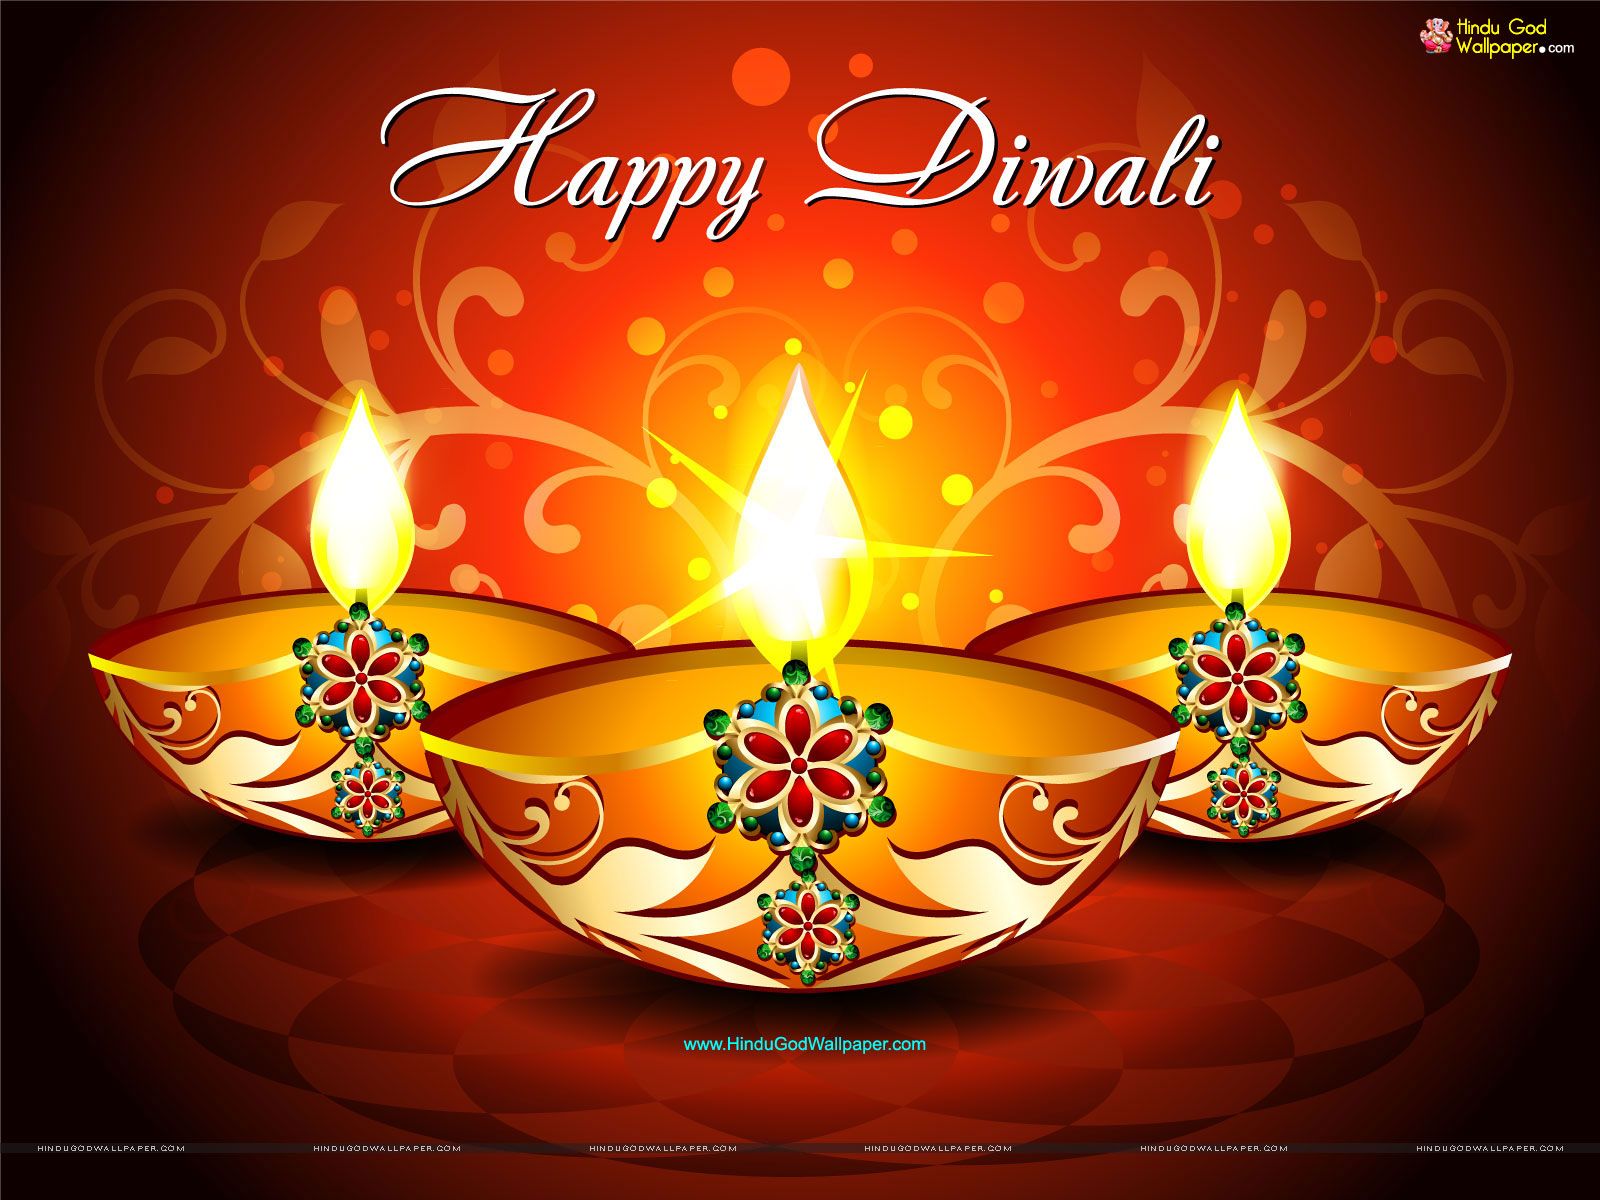 Diwali. Happy diwali wallpaper, Diwali wishes, Diwali greetings